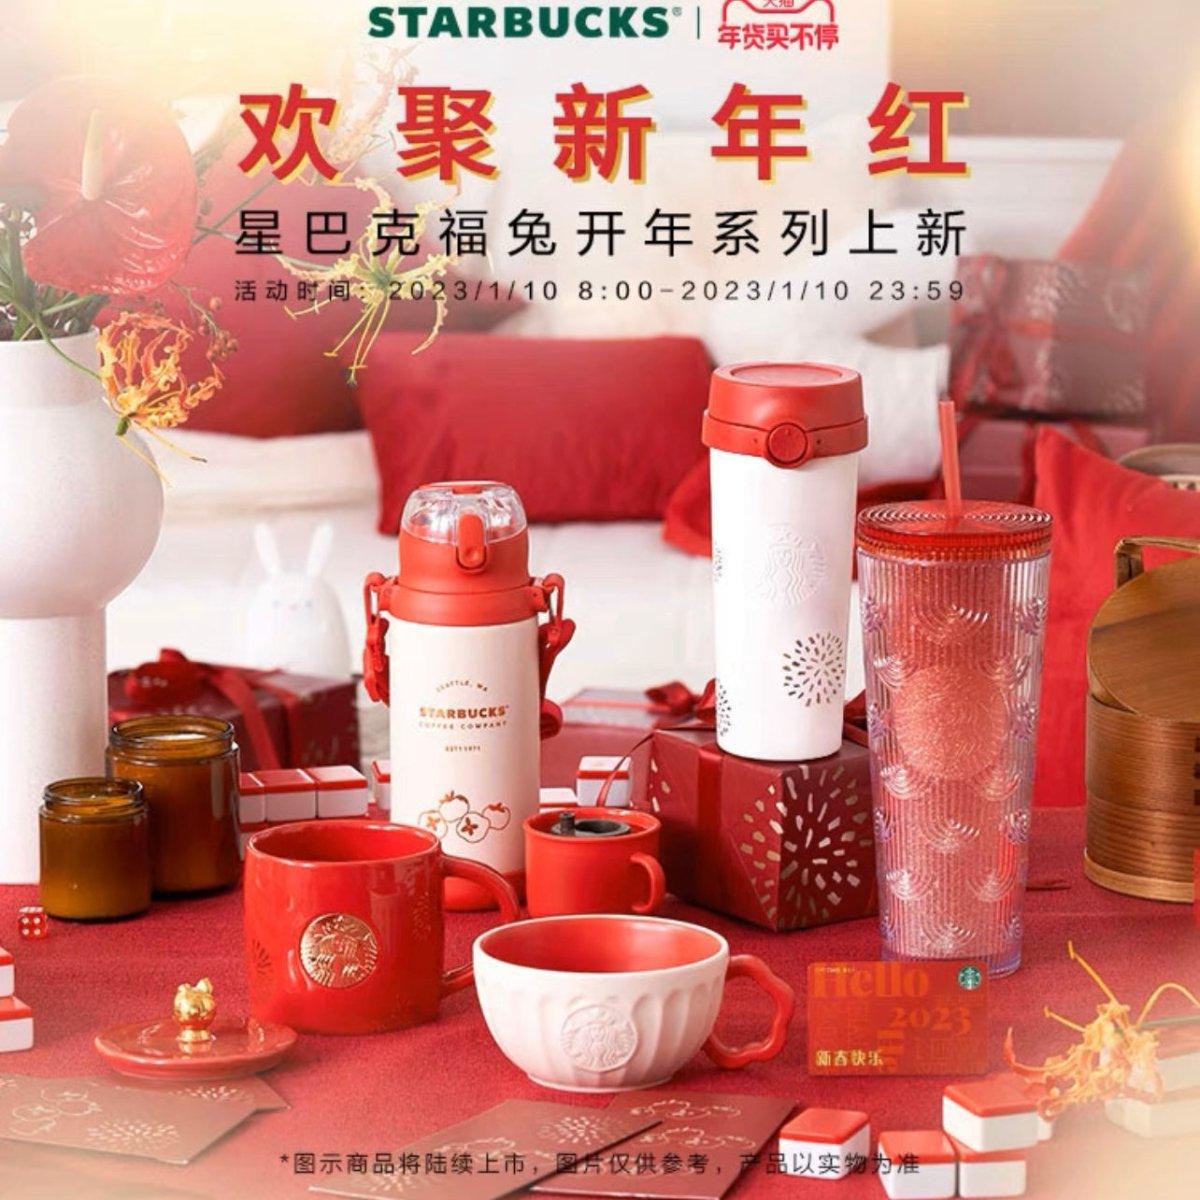 Starbucks Chinese New Year 2023 Series – Ann Ann Starbucks